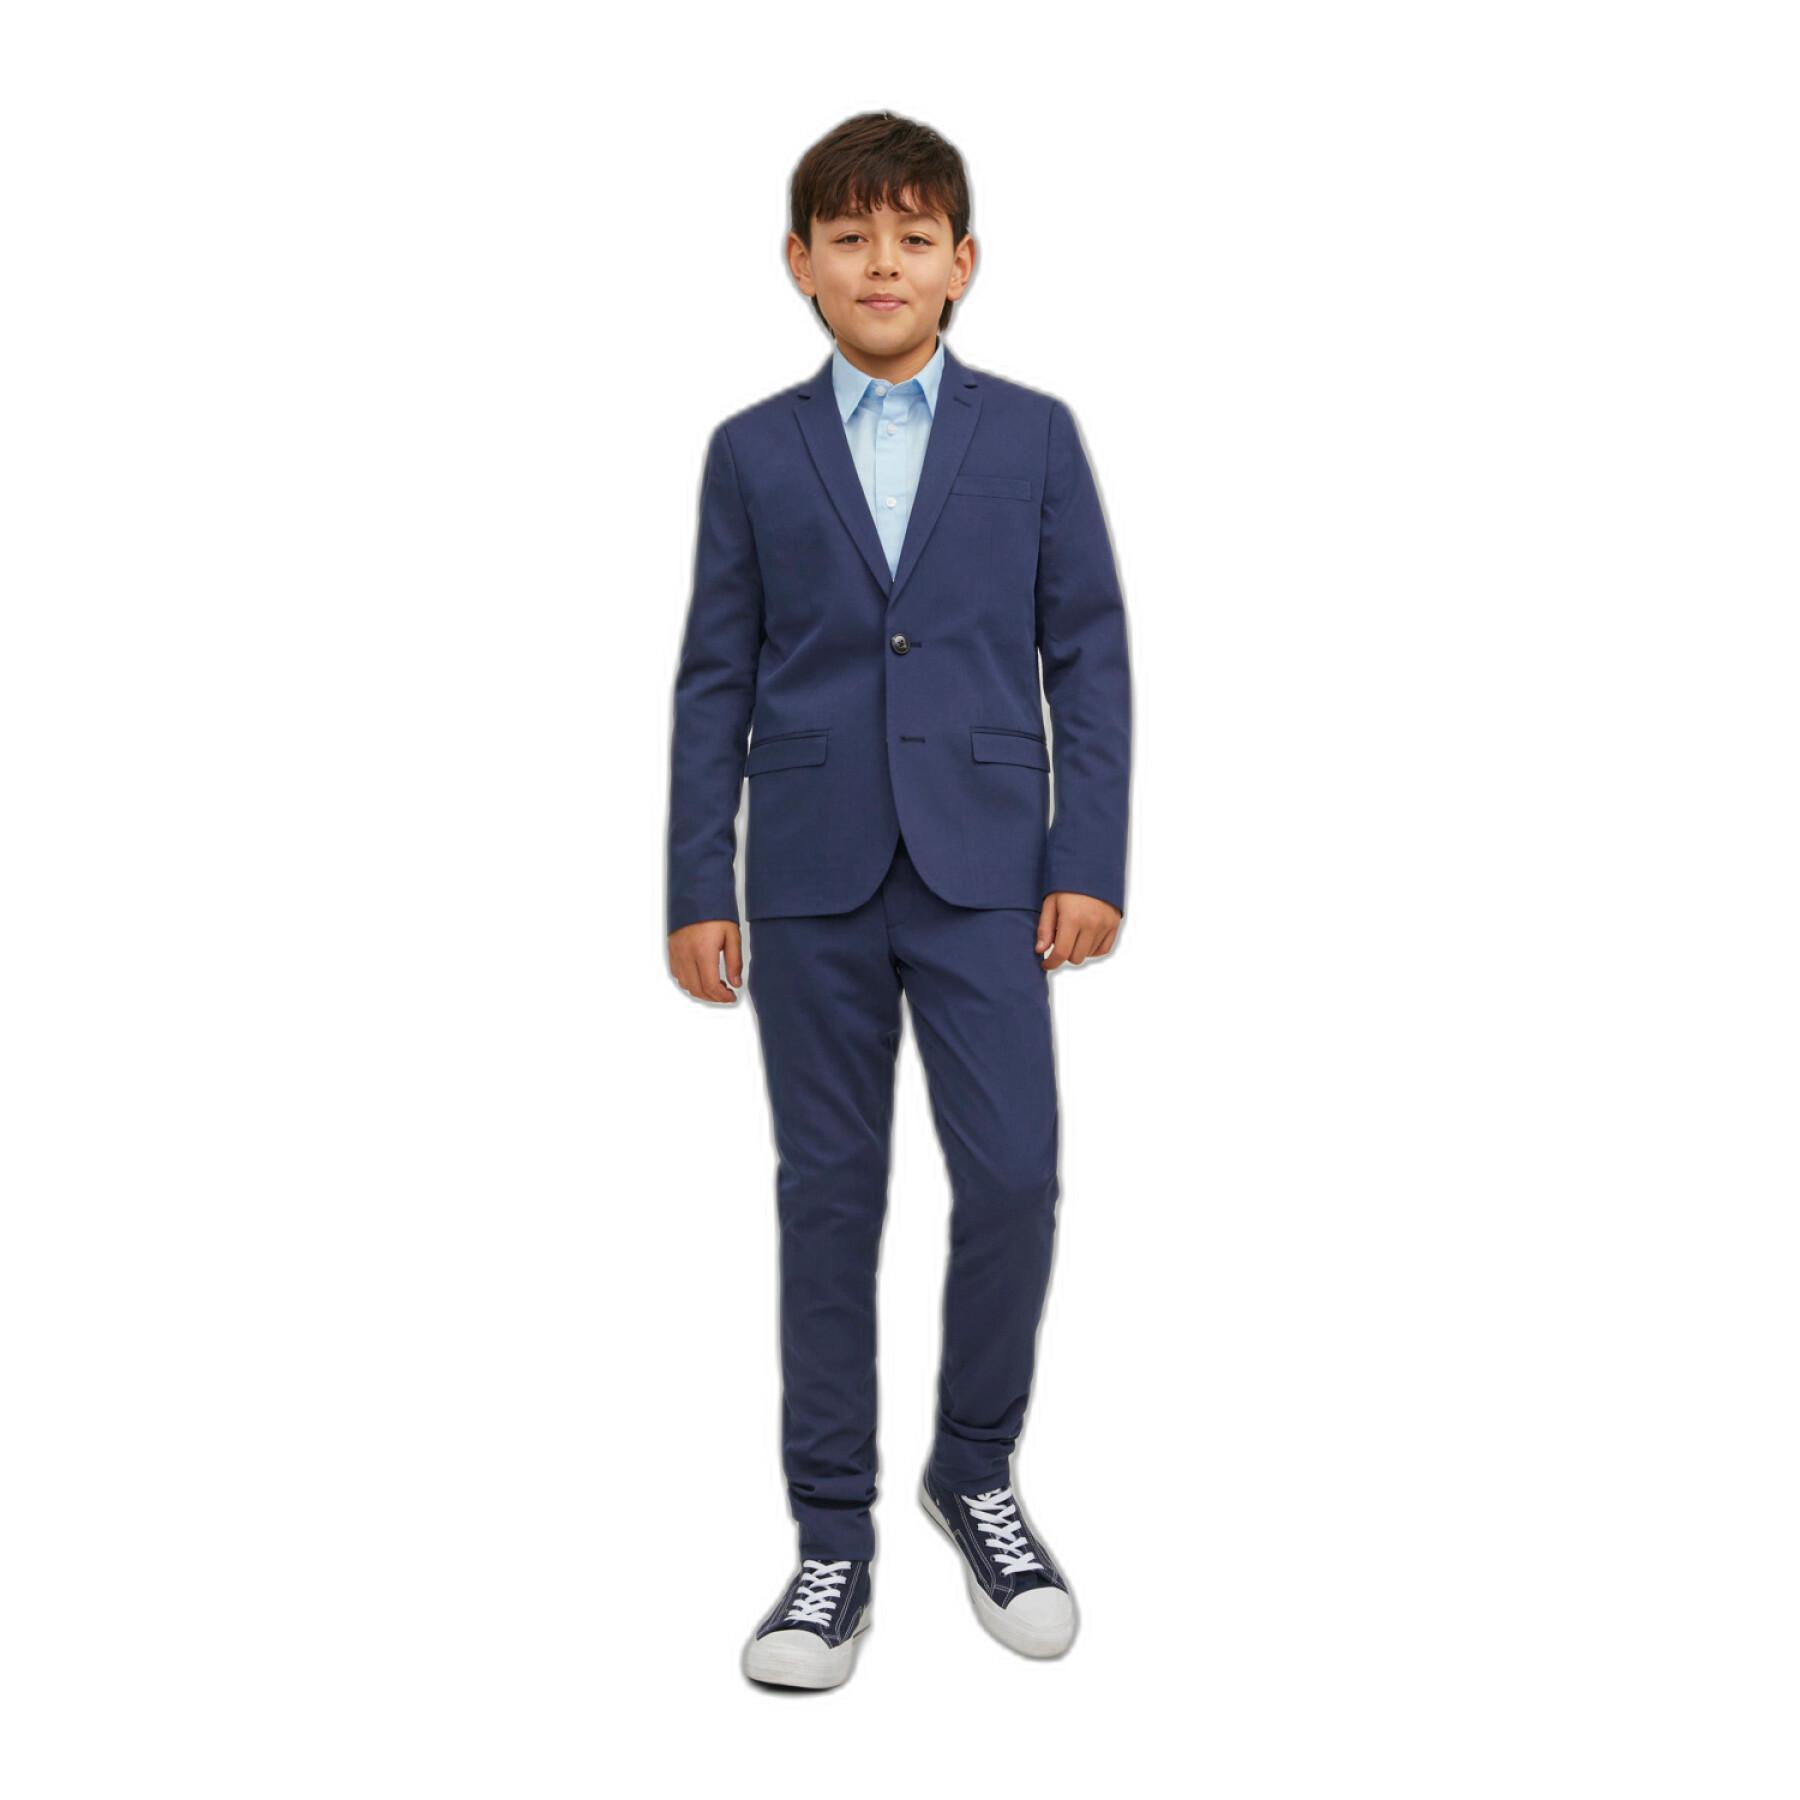 Children's suit pants Jack & Jones Solar